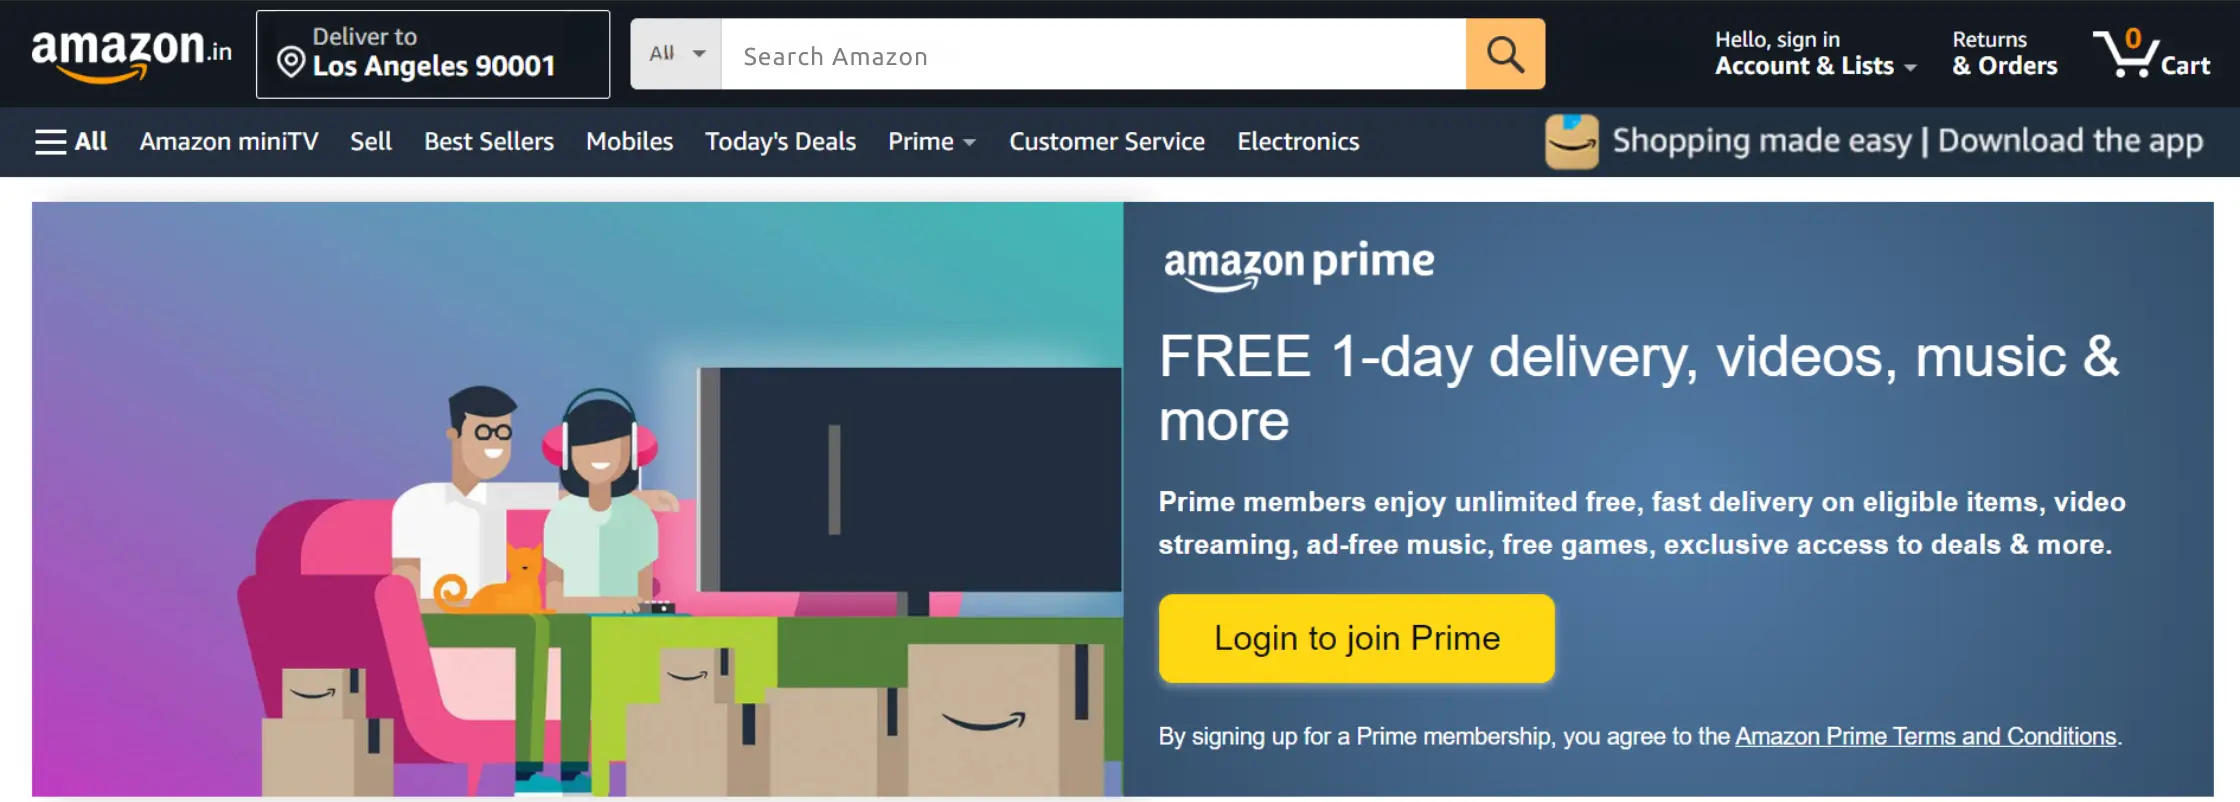 amazon prime login page screenshot